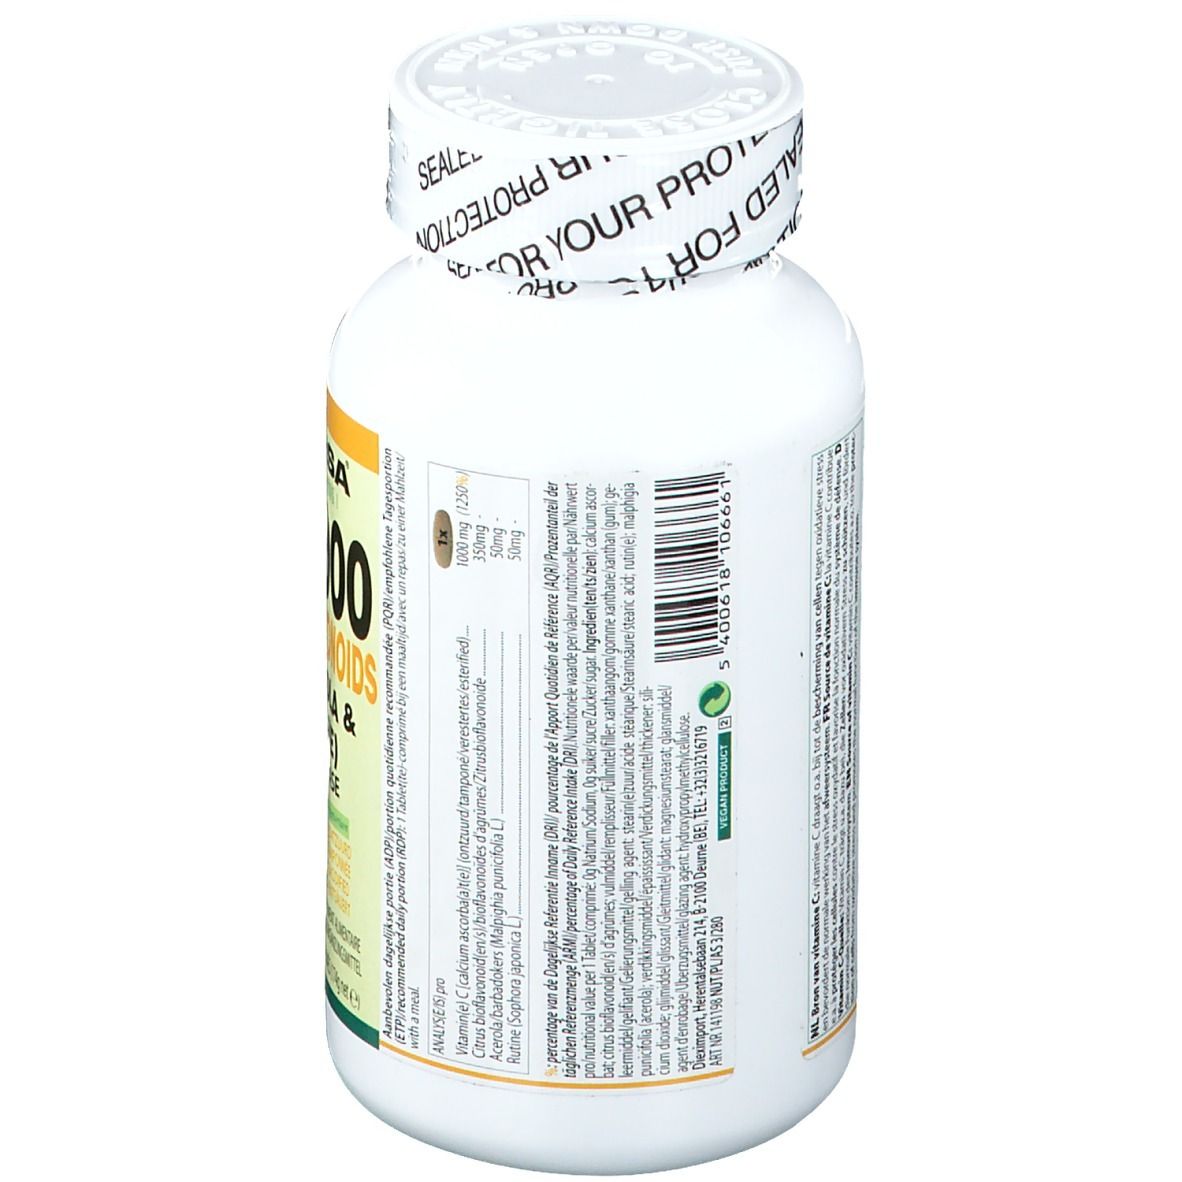 Altisa Vitamine C 1000mg + Bioflavonoïden Timed Release